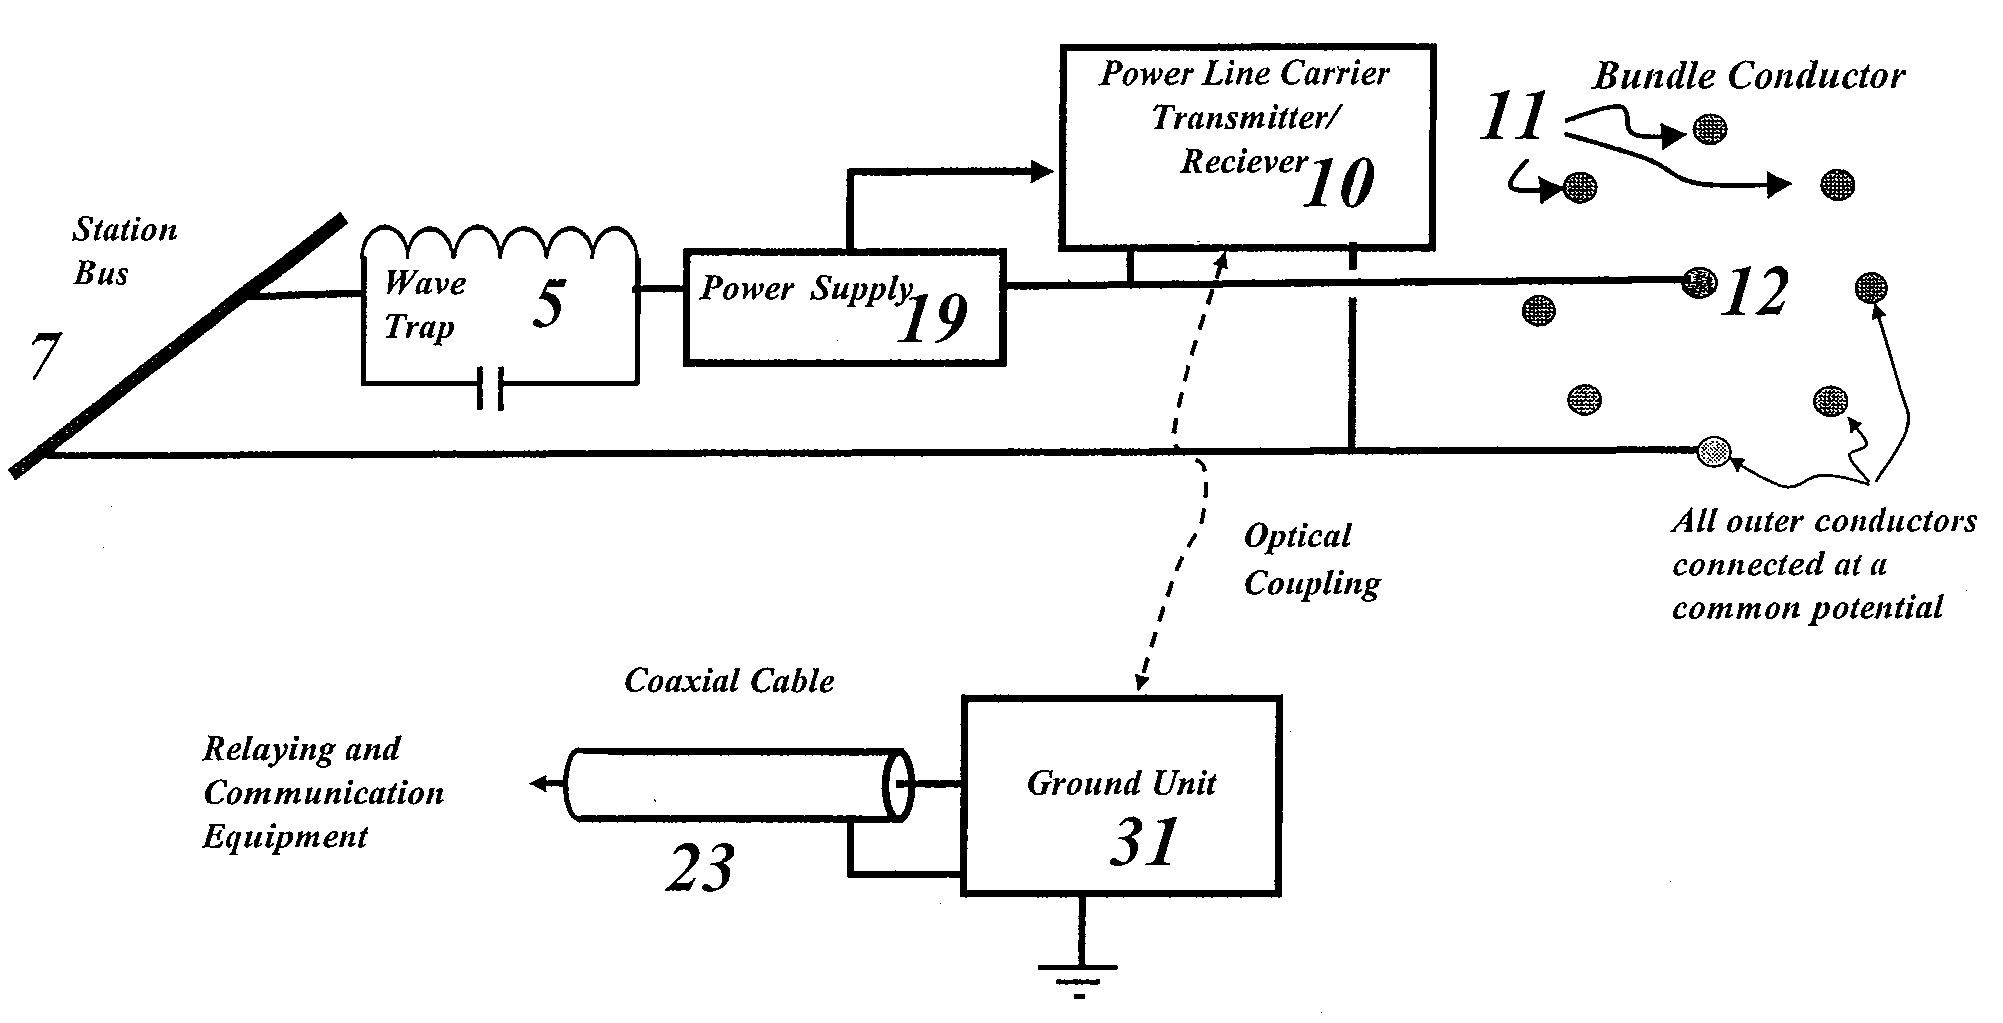 Intra-Bundle Power Line Carrier Current System